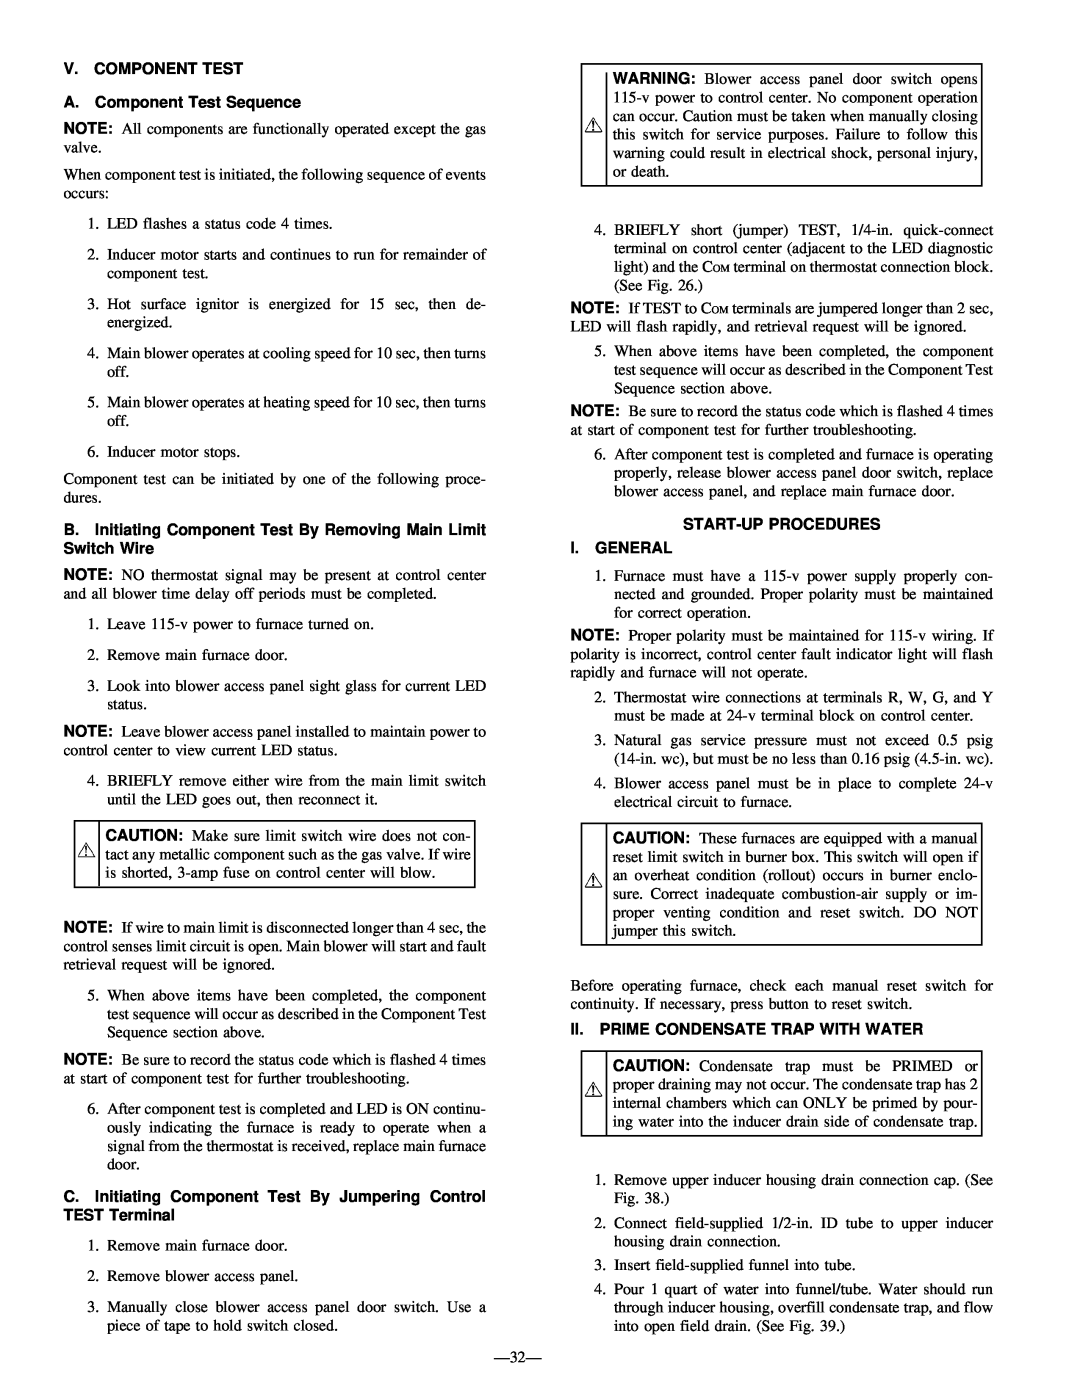 Bryant 345MAV instruction manual V.COMPONENT TEST A.Component Test Sequence, Start-Upprocedures I.General 